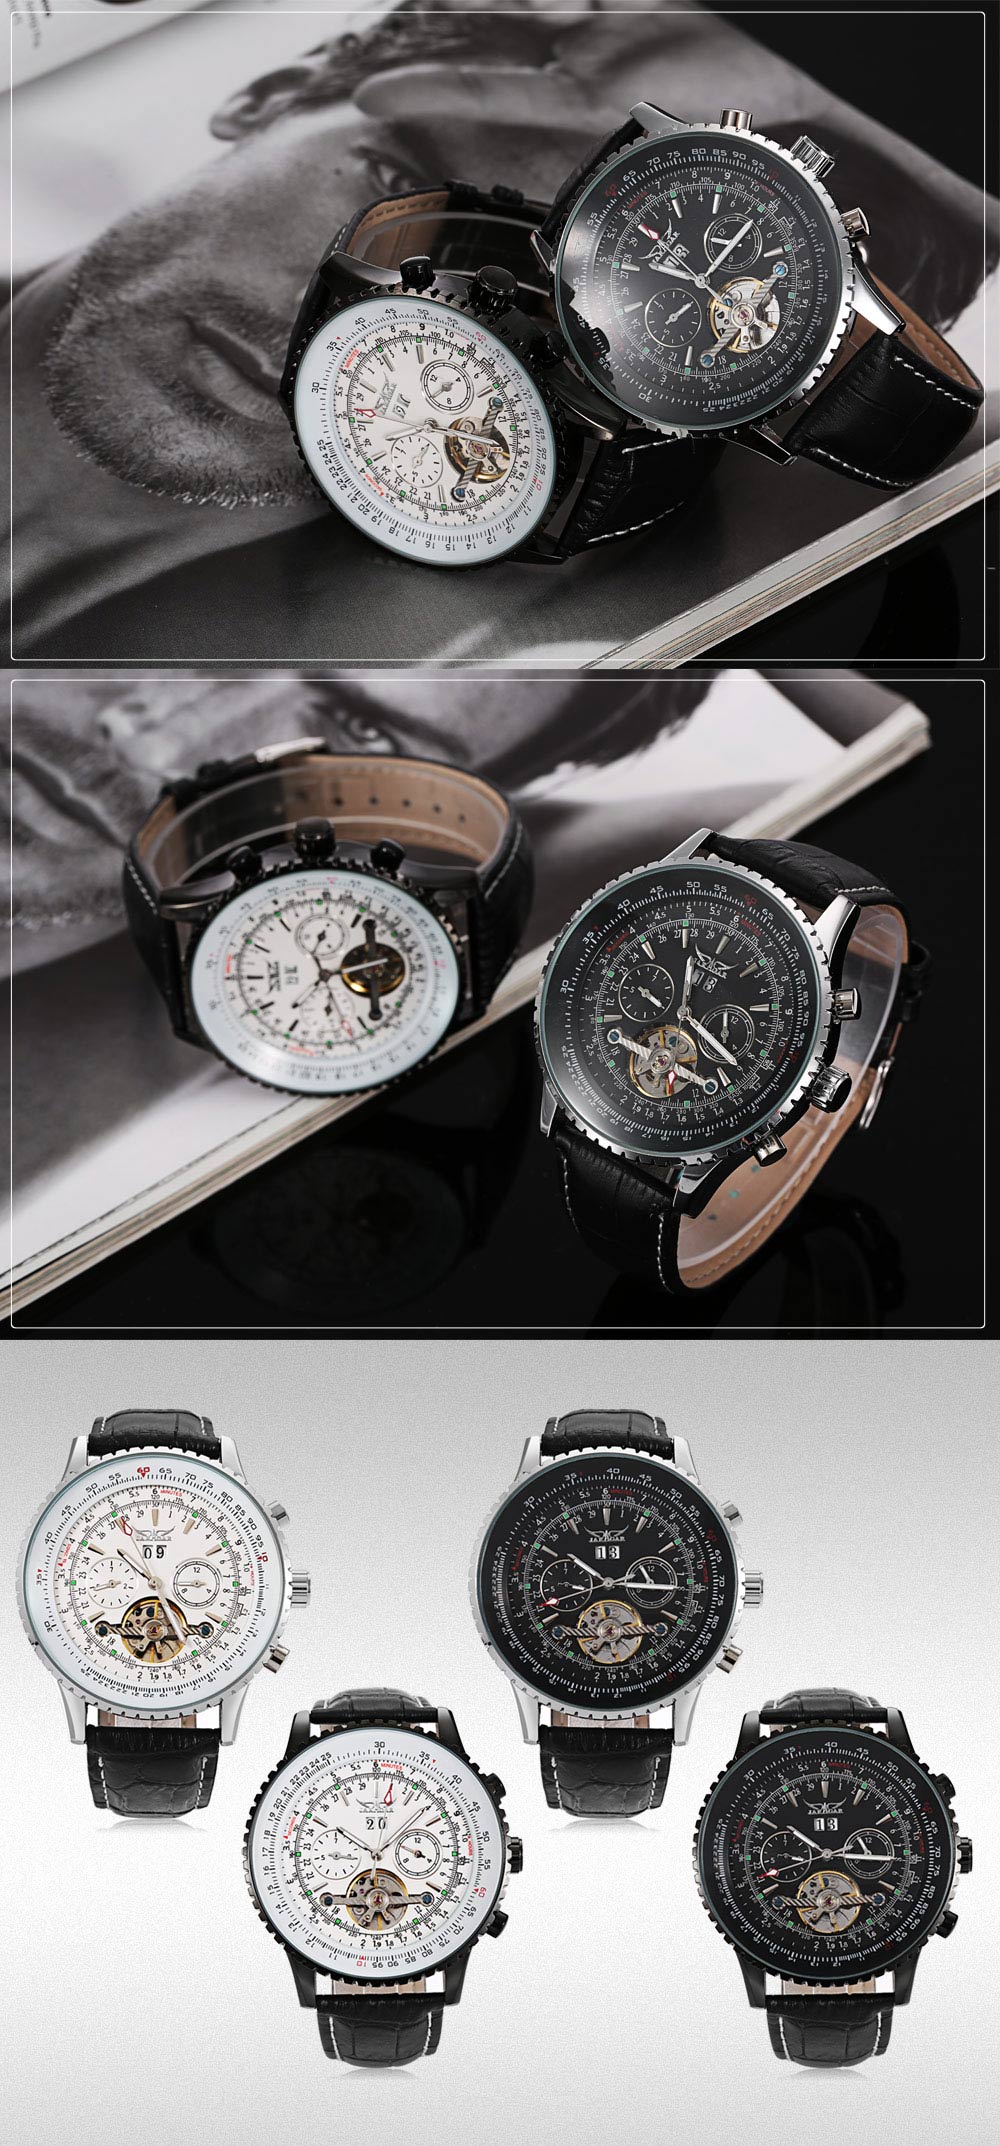 JARAGAR J1205314 Men Auto Mechanical Watch Tourbillon Calendar Genuine Leather Band Wristwatch